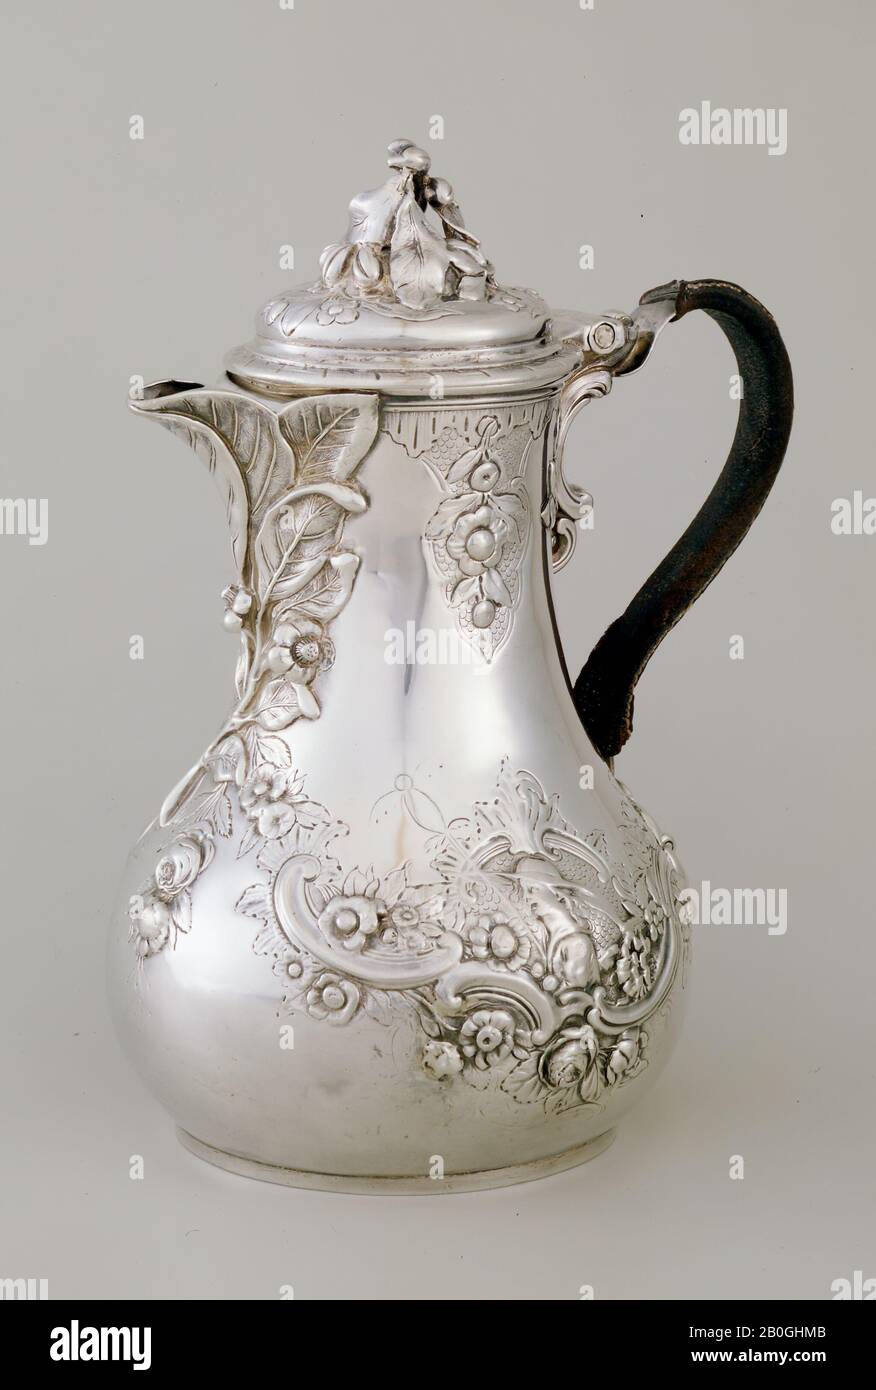 Paul de Lamerie, inglés, 1688–1751, jarra de café o agua caliente, 1749/50,  plata y cuero, 8 7/16 x 6 1/16 x 4 5/8 pulg. (21.4 x 15.4 x 11.7 cm  Fotografía de stock - Alamy